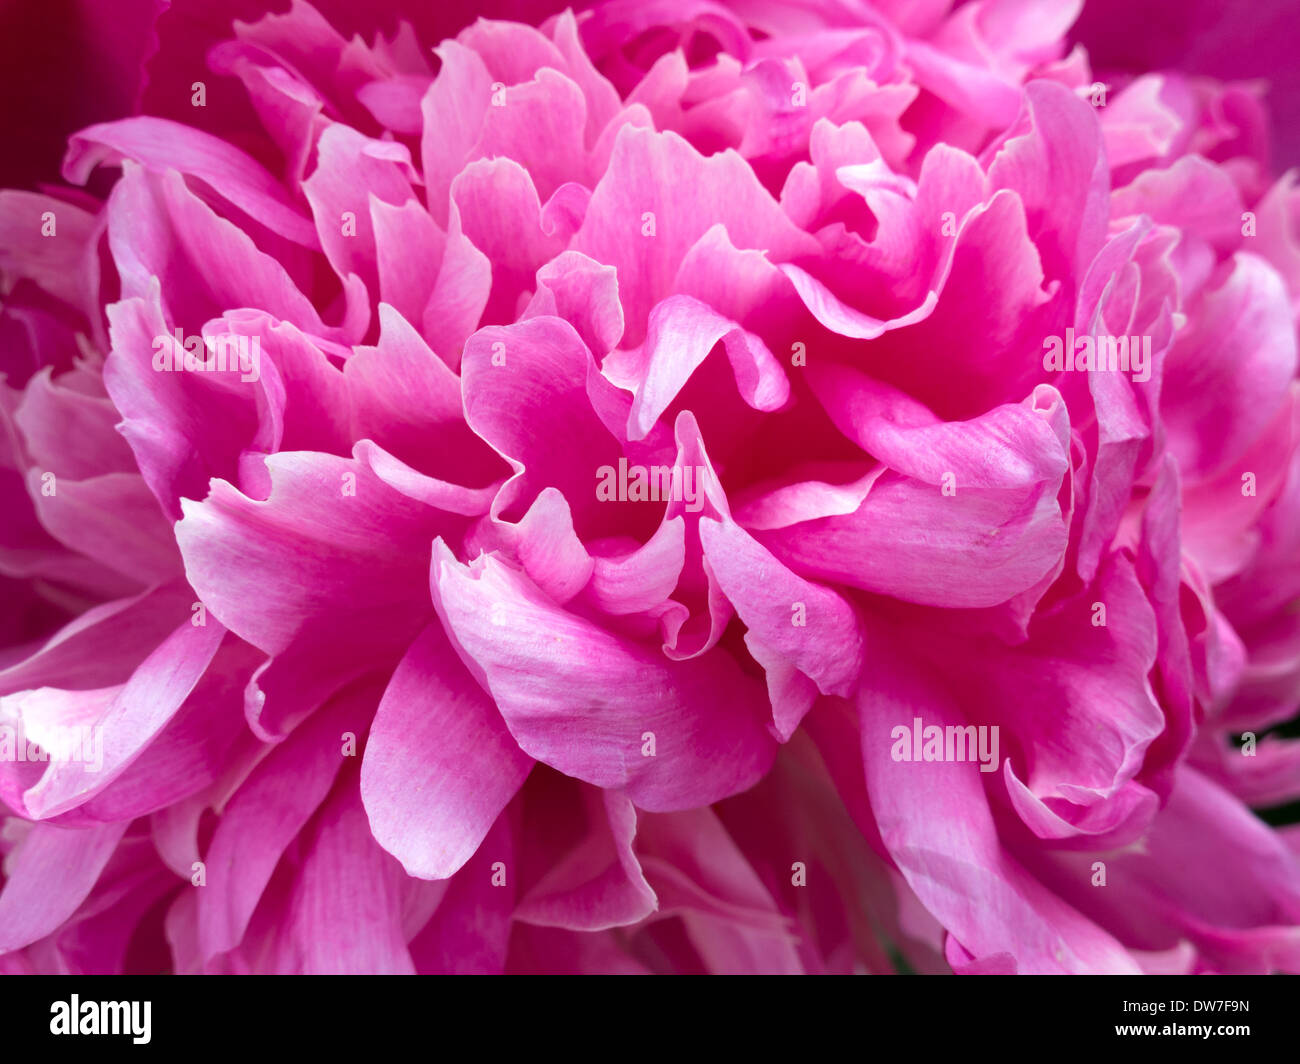 Closeup detail of pink Peony flowers Stock Photo